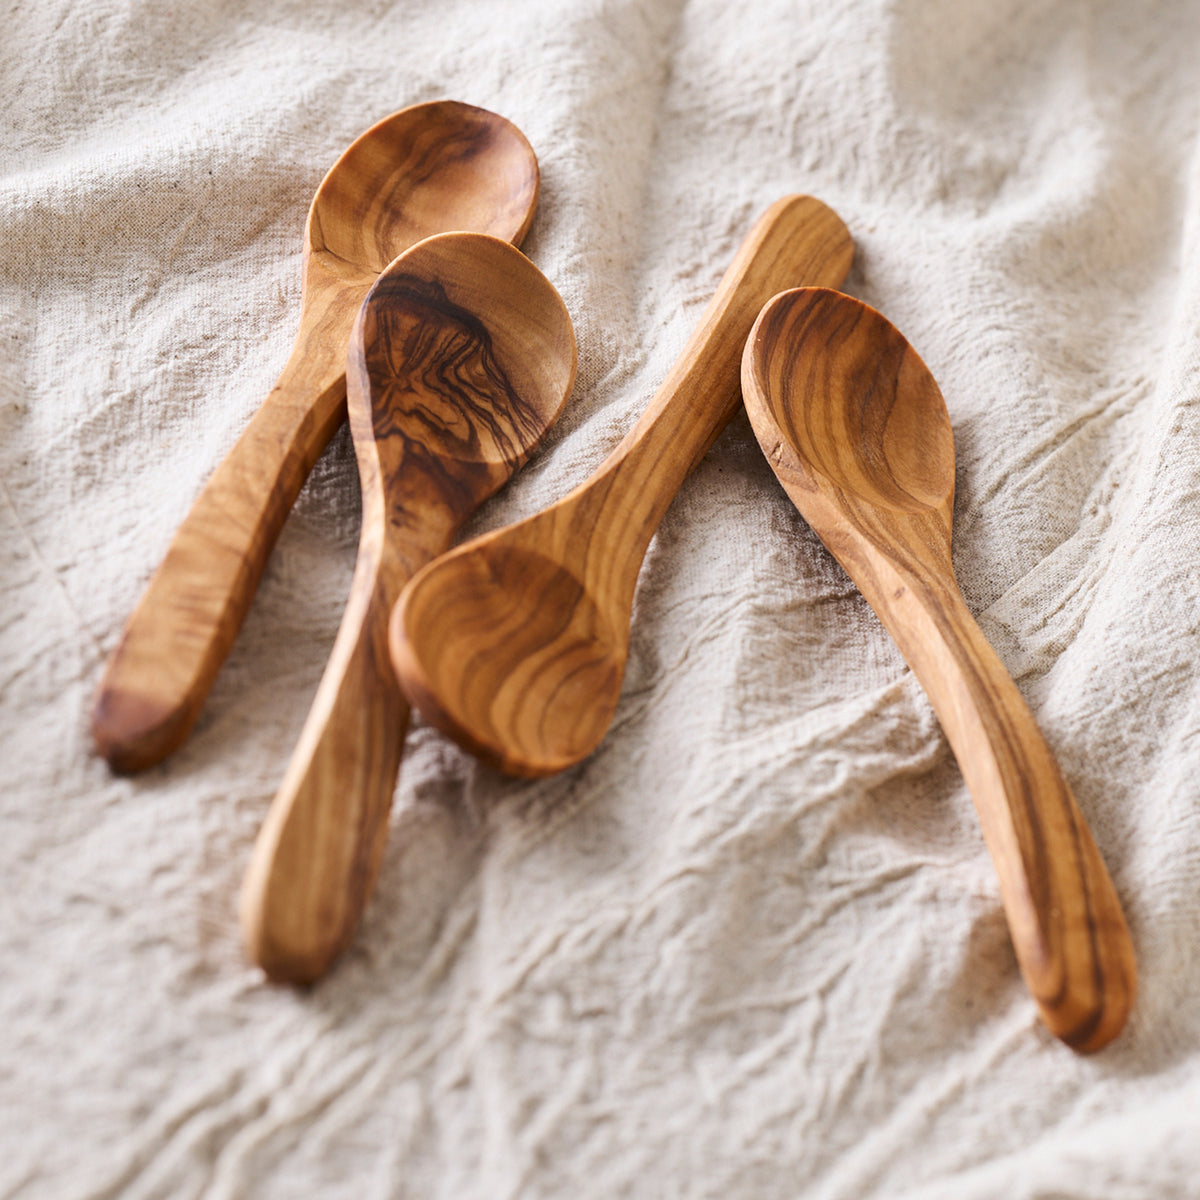 Olive Wood Small Spoons Set/4 - Caskata